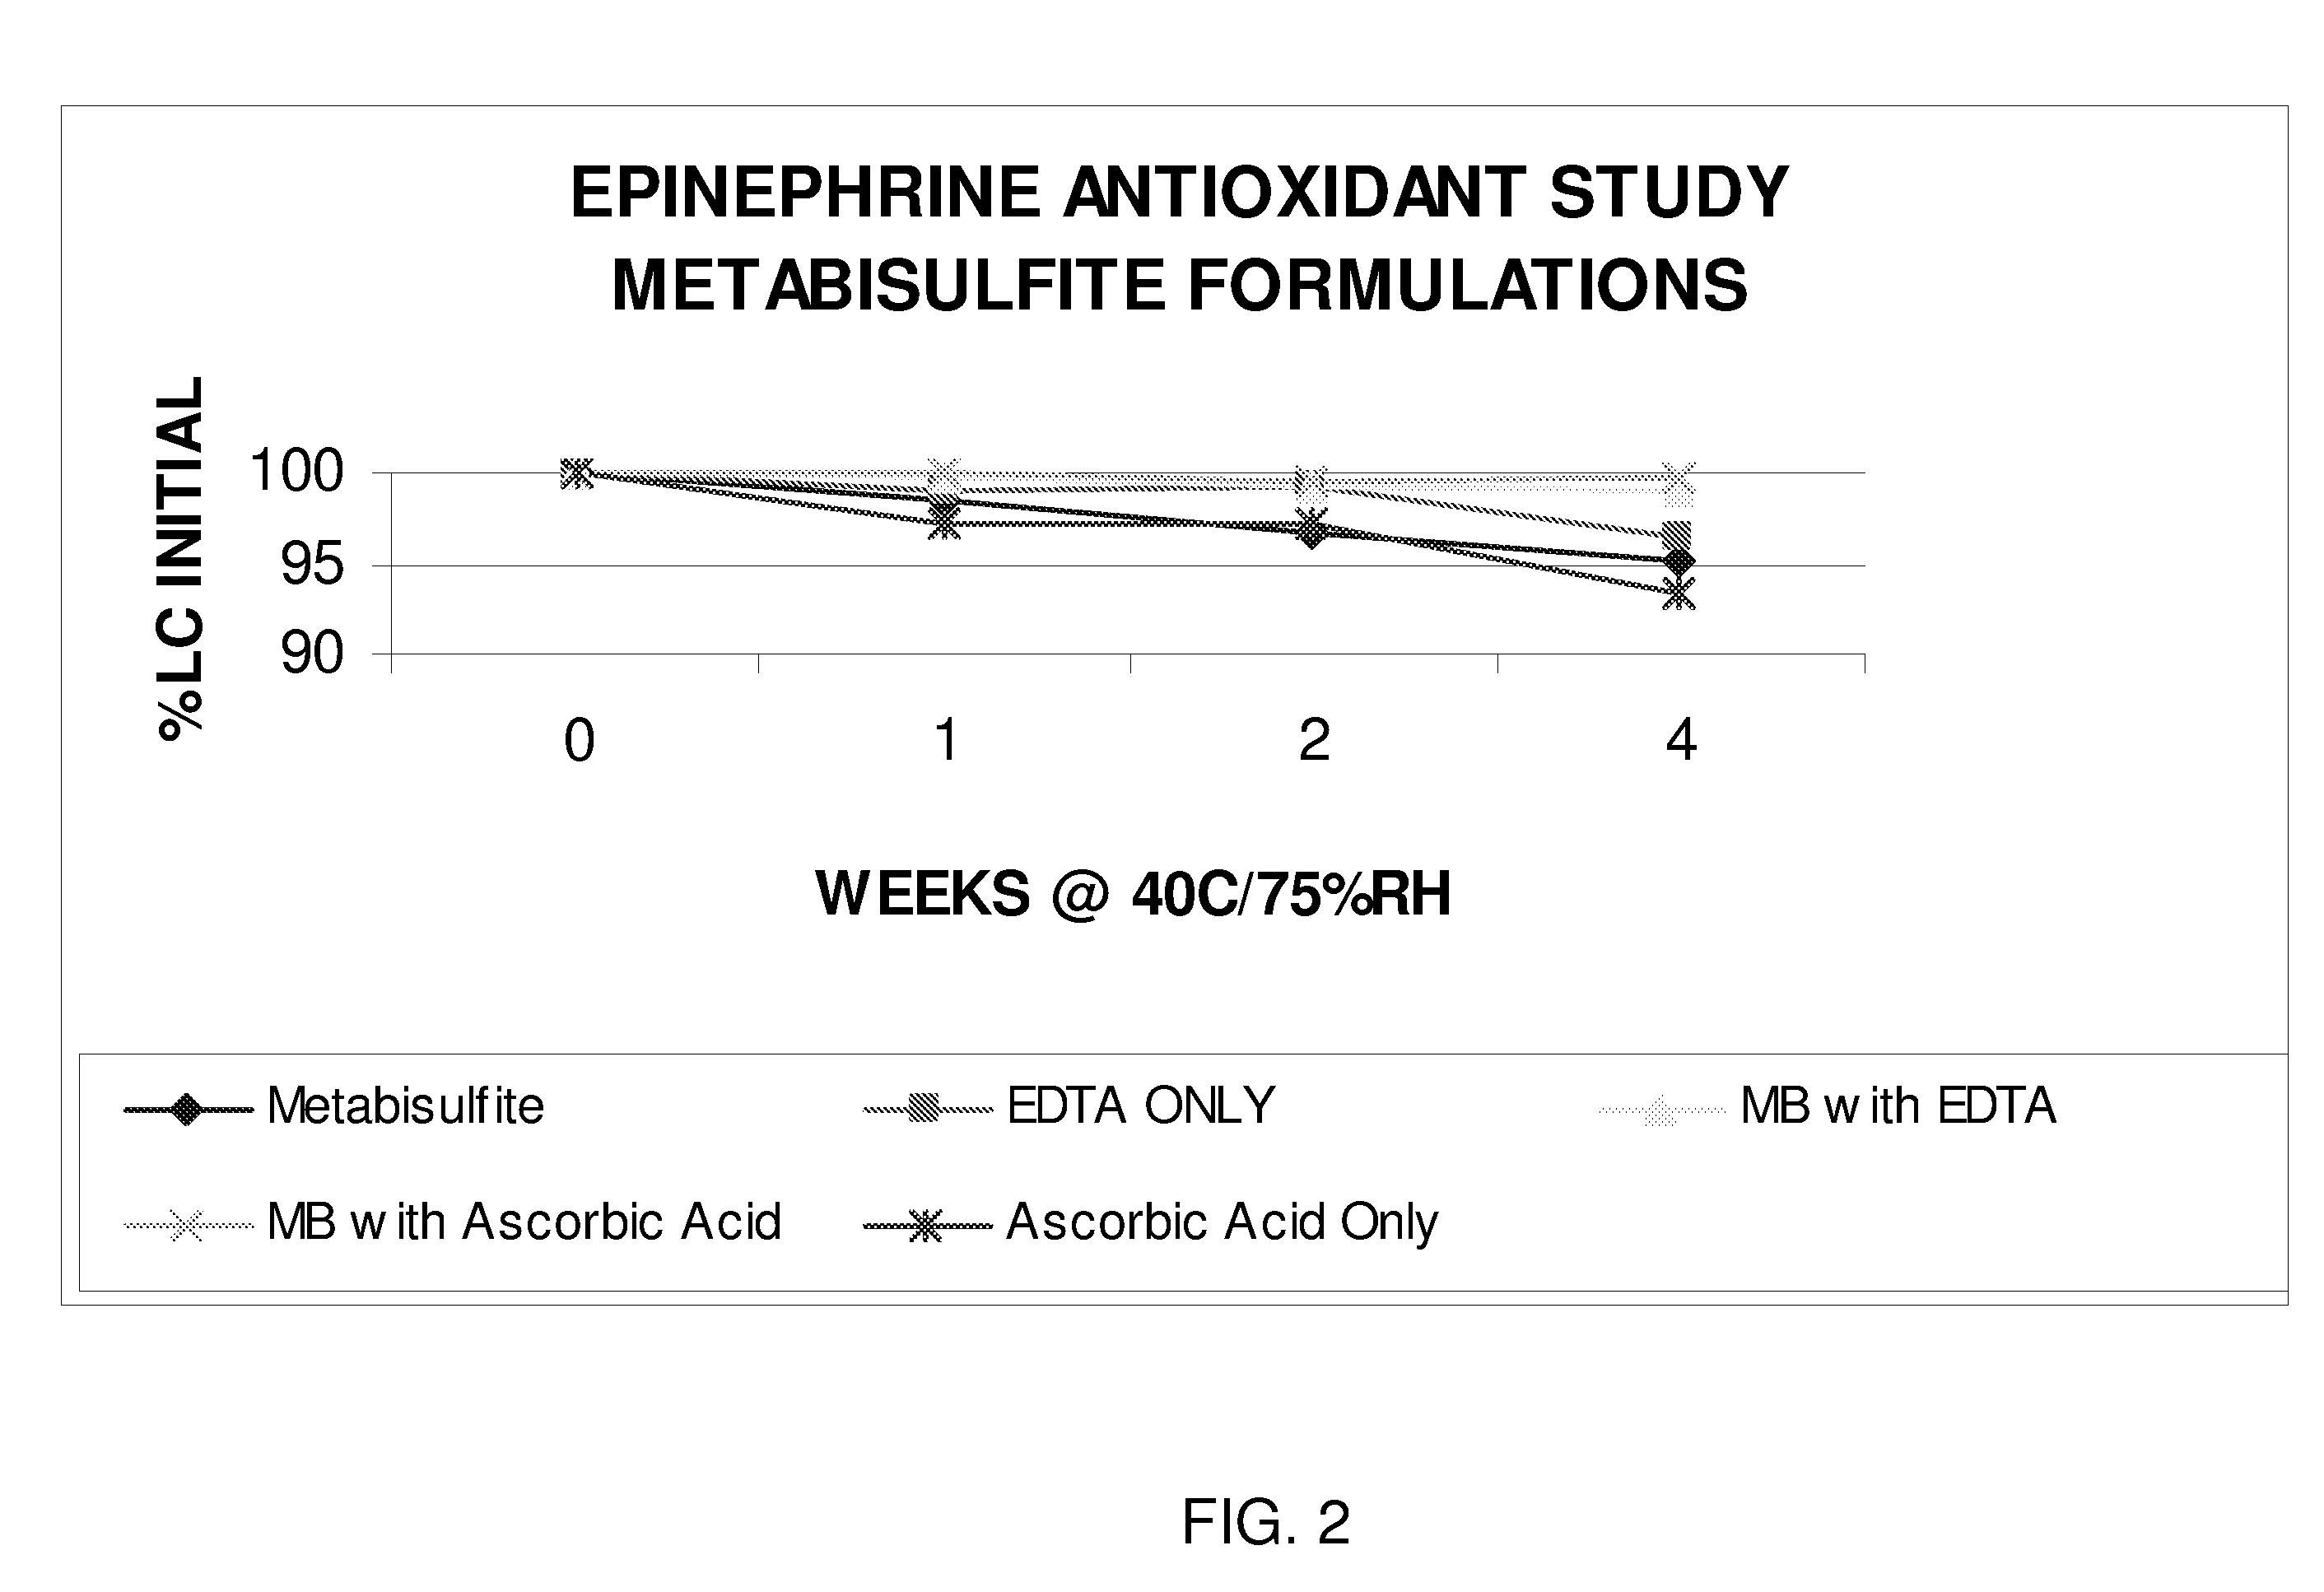 Epinephrine formulations